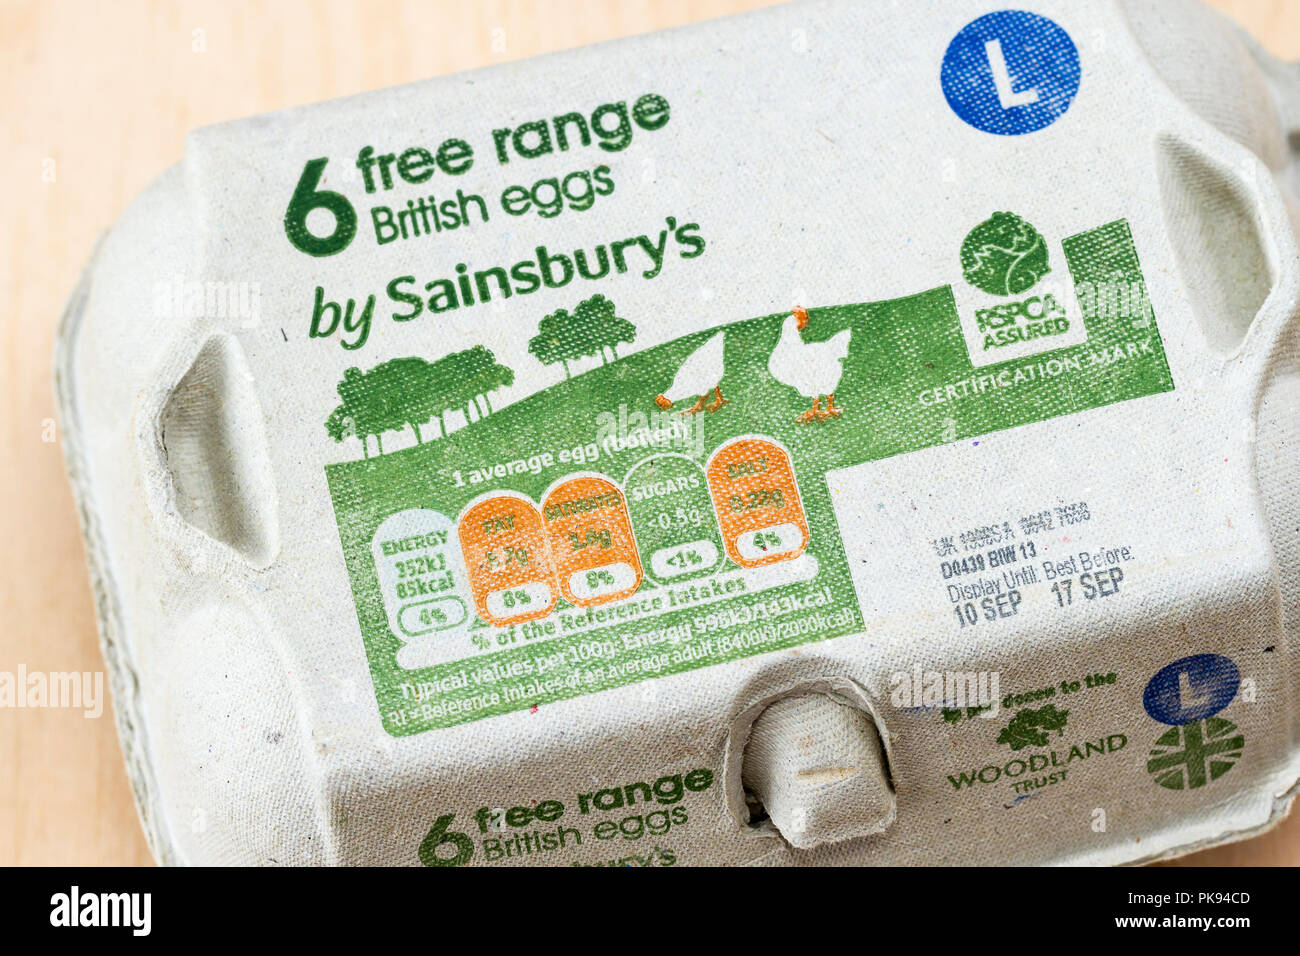 Box of free range British eggs by Sainsbury's, close up, United Kingdom Stock Photo